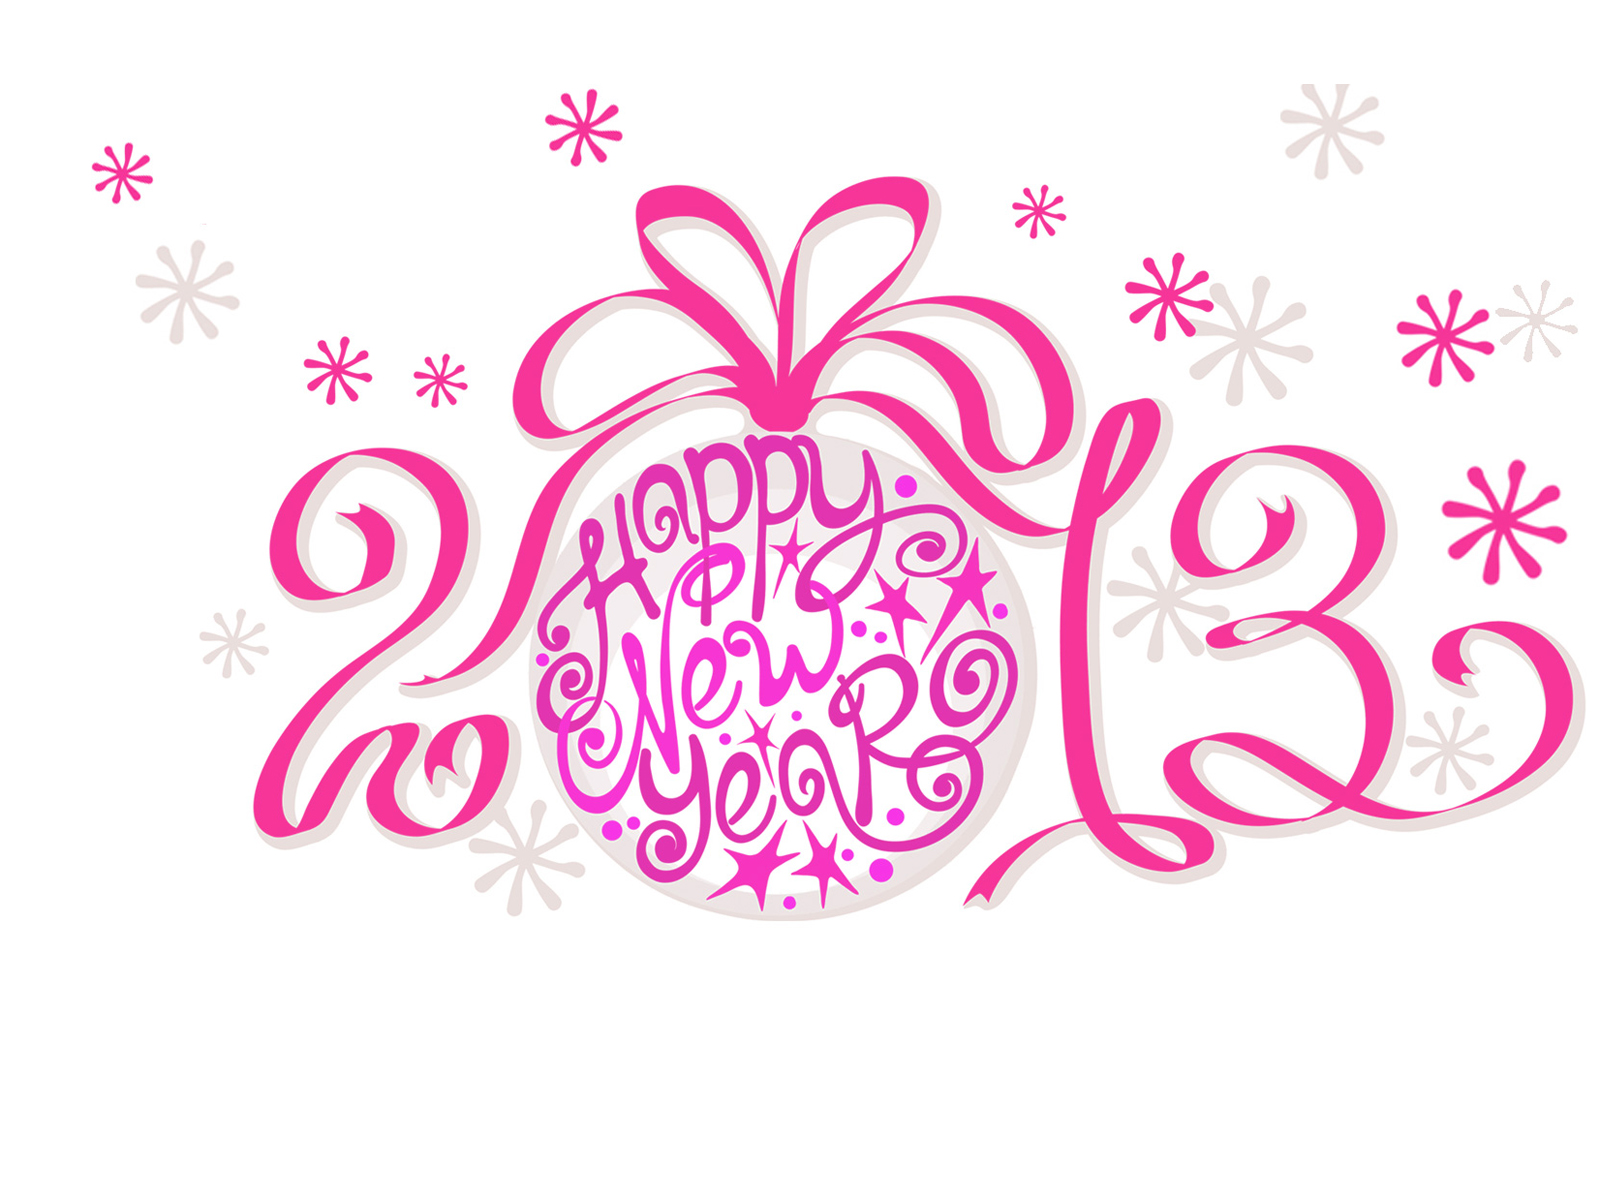 http://2.bp.blogspot.com/-OjJ_RgnPhhk/UORe7JezX_I/AAAAAAAAAmI/xTKktPy8Im0/s1600/Happy-New-Year-2013-HD-Wallpaper-6.jpg